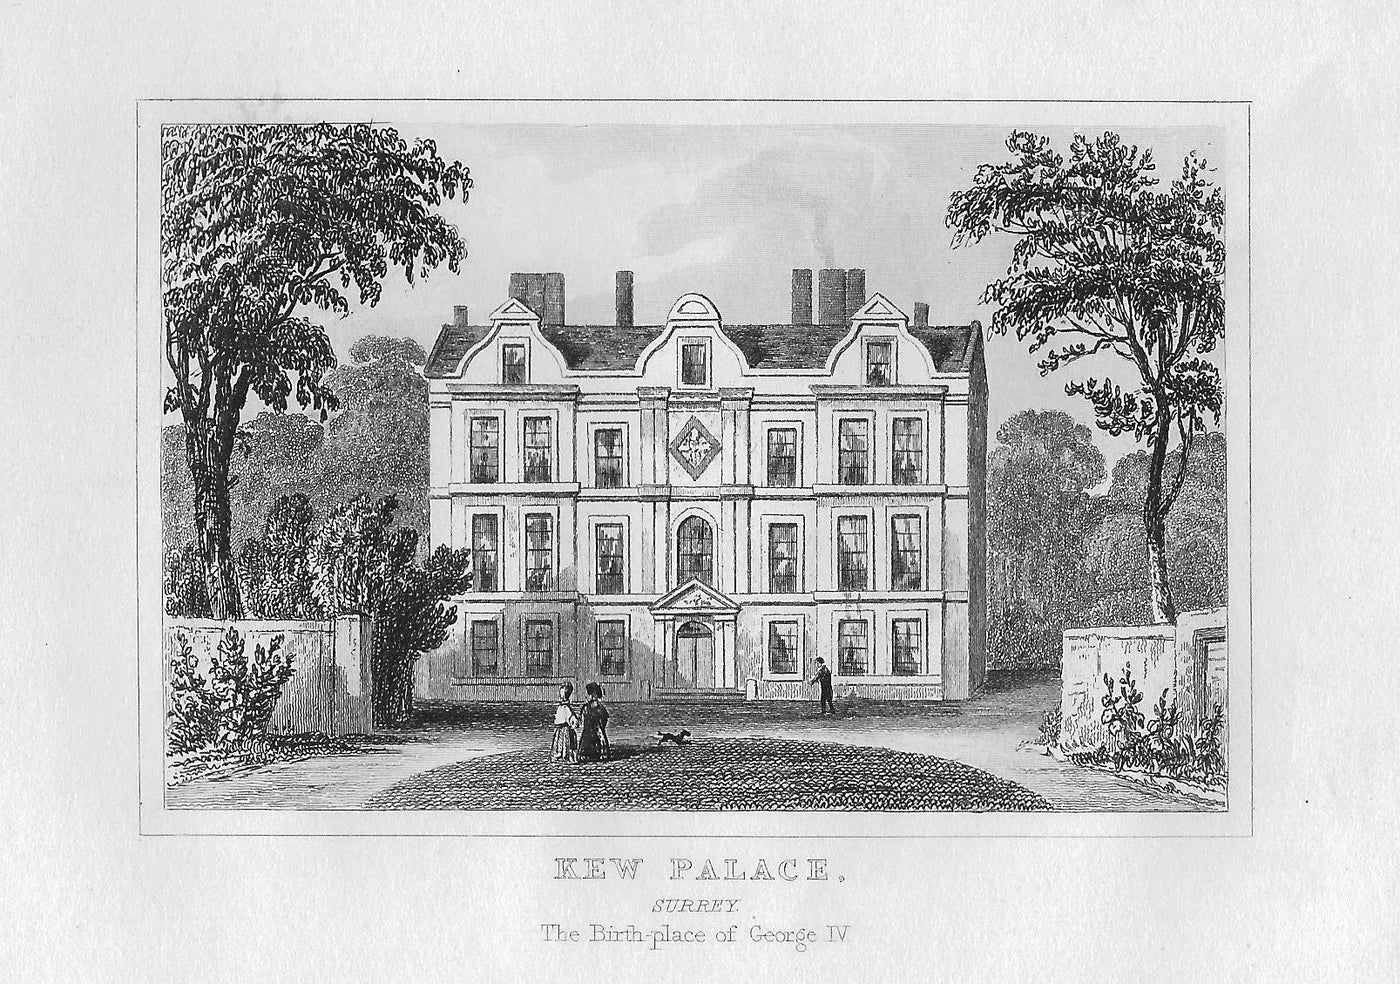 Kew Palace, Surrey